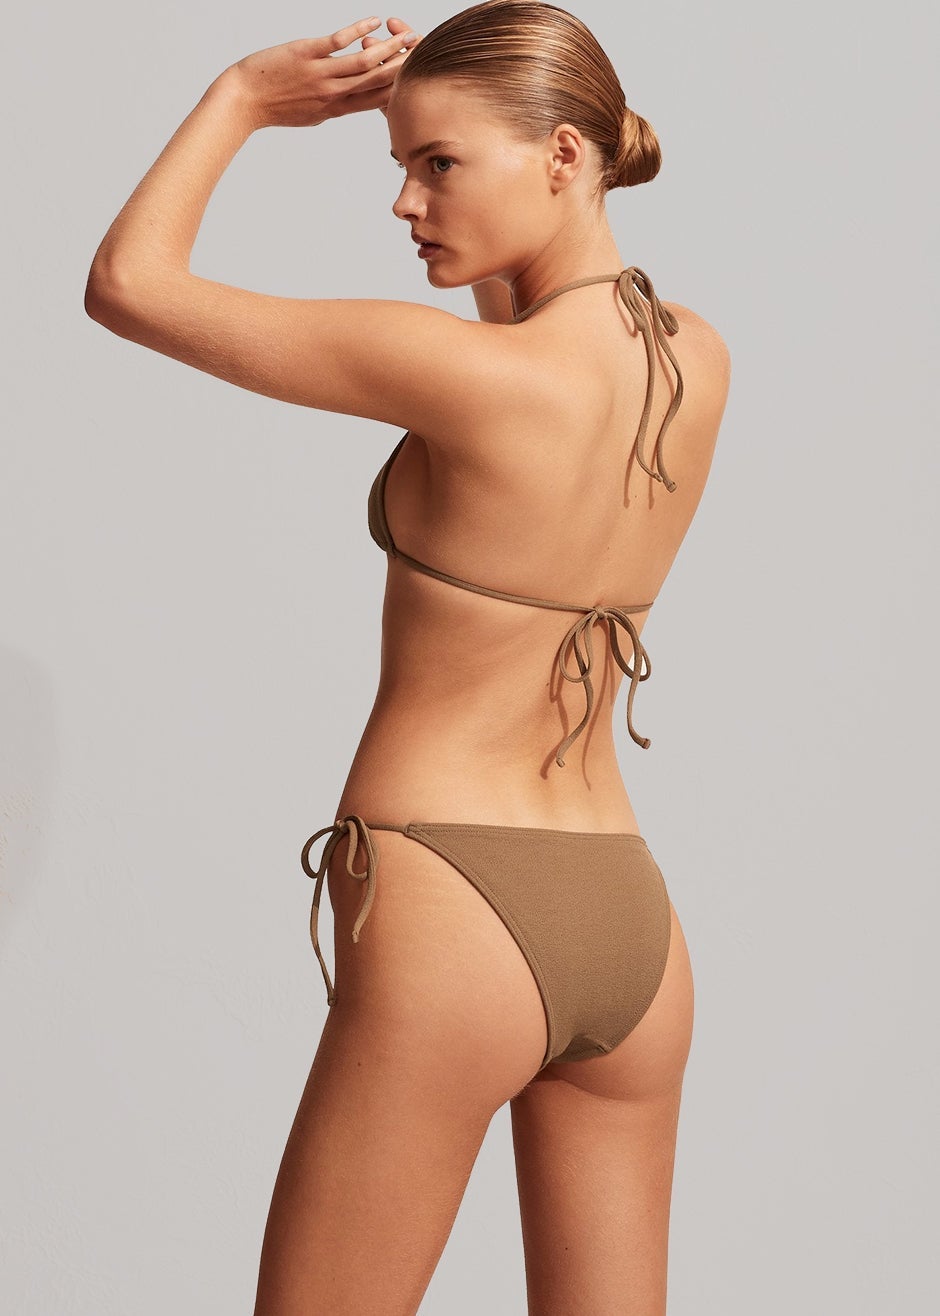 Matteau String Bikini Brief - Cinnamon Crinkle - 3